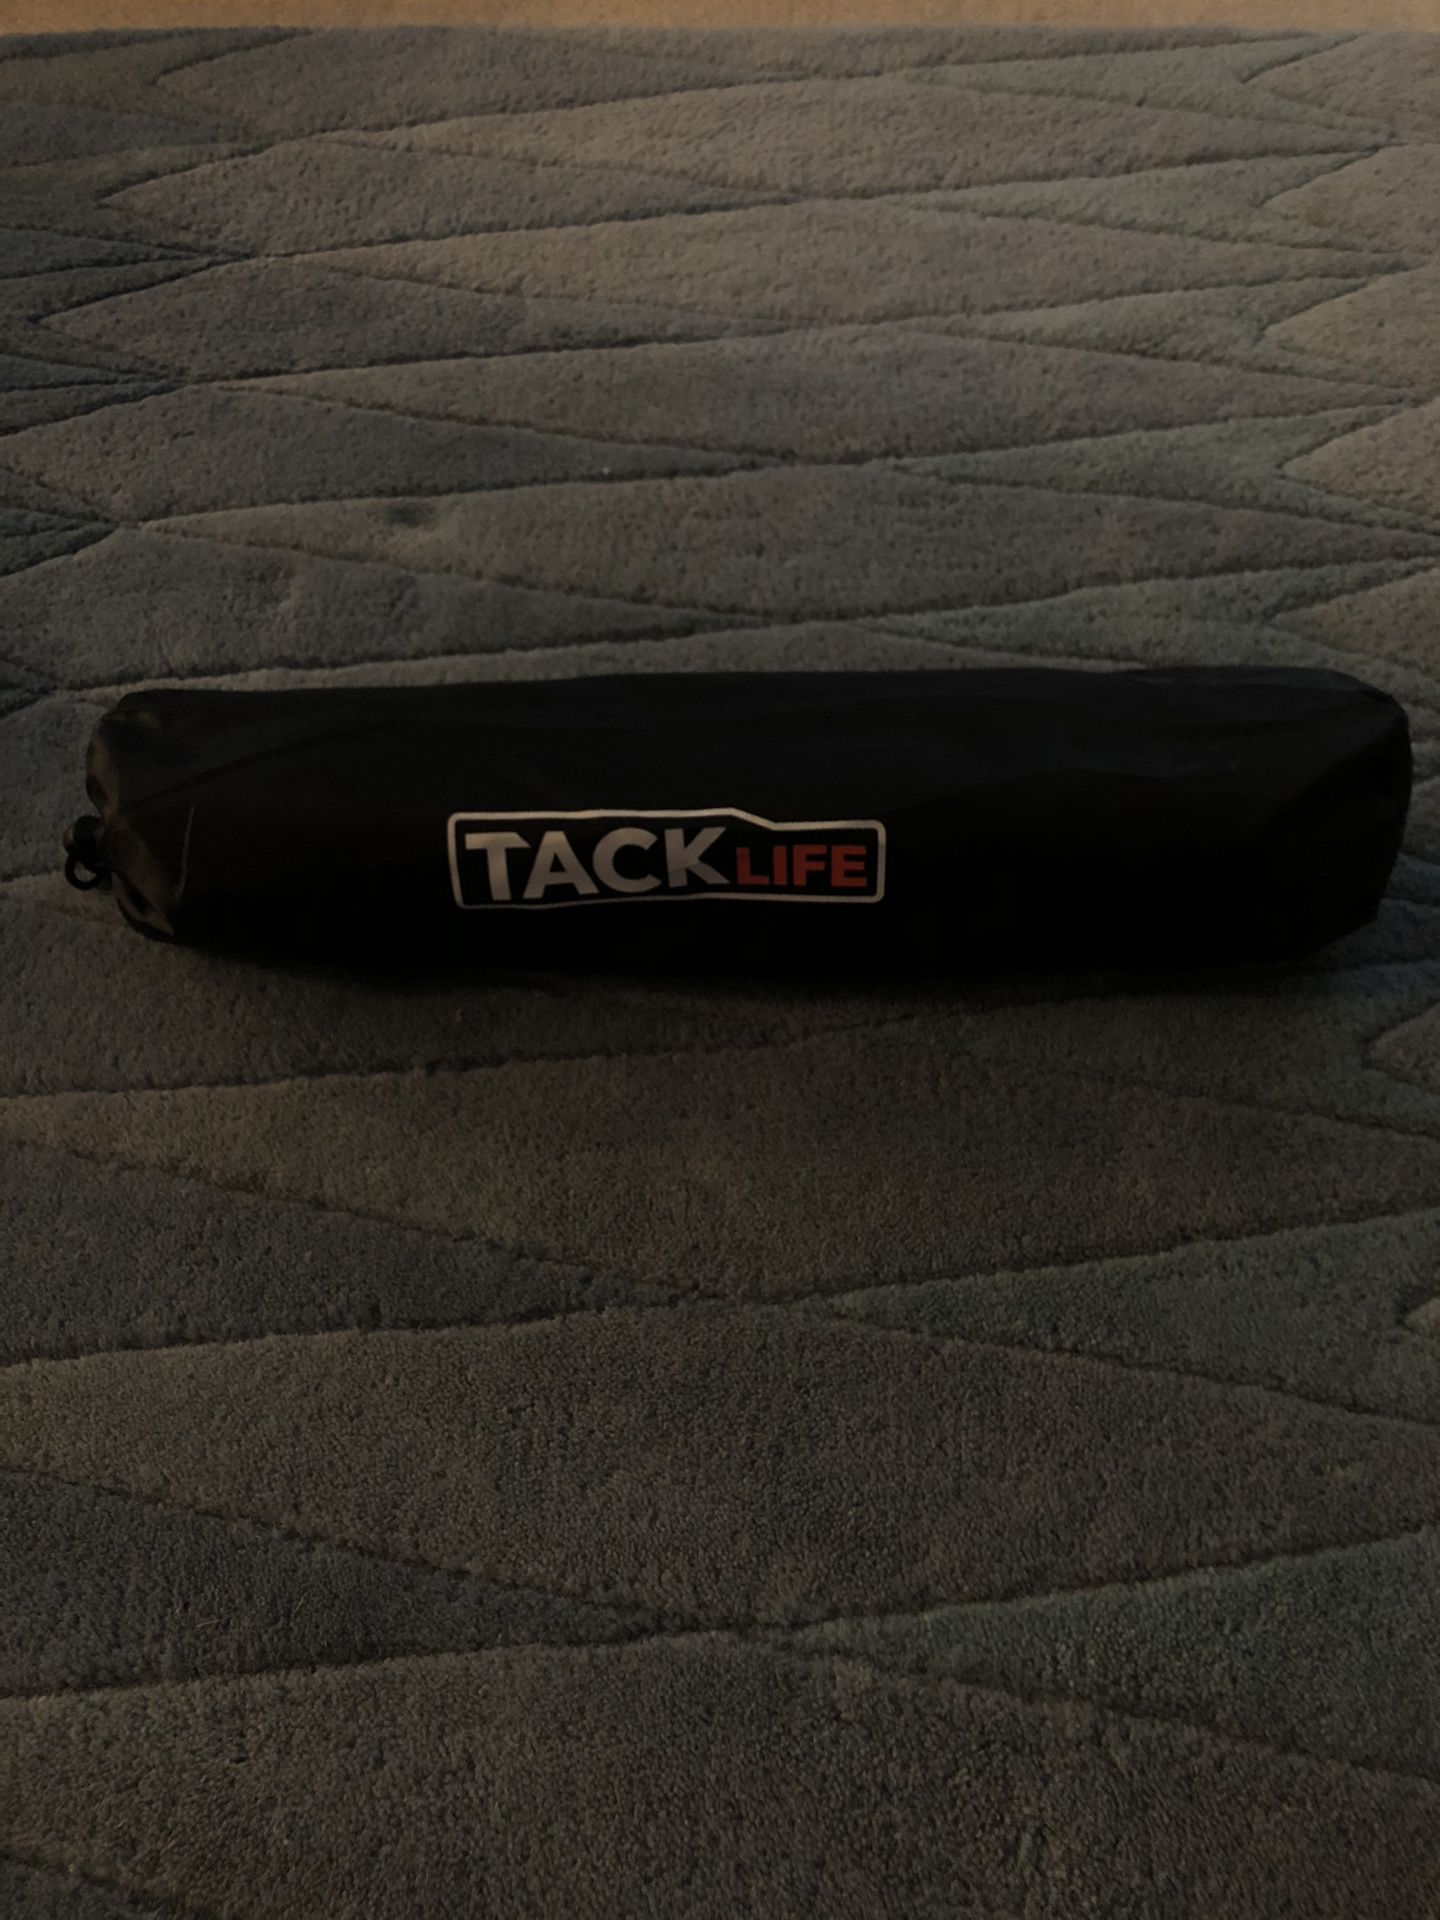 Brand NEW Tack Life camera tripod